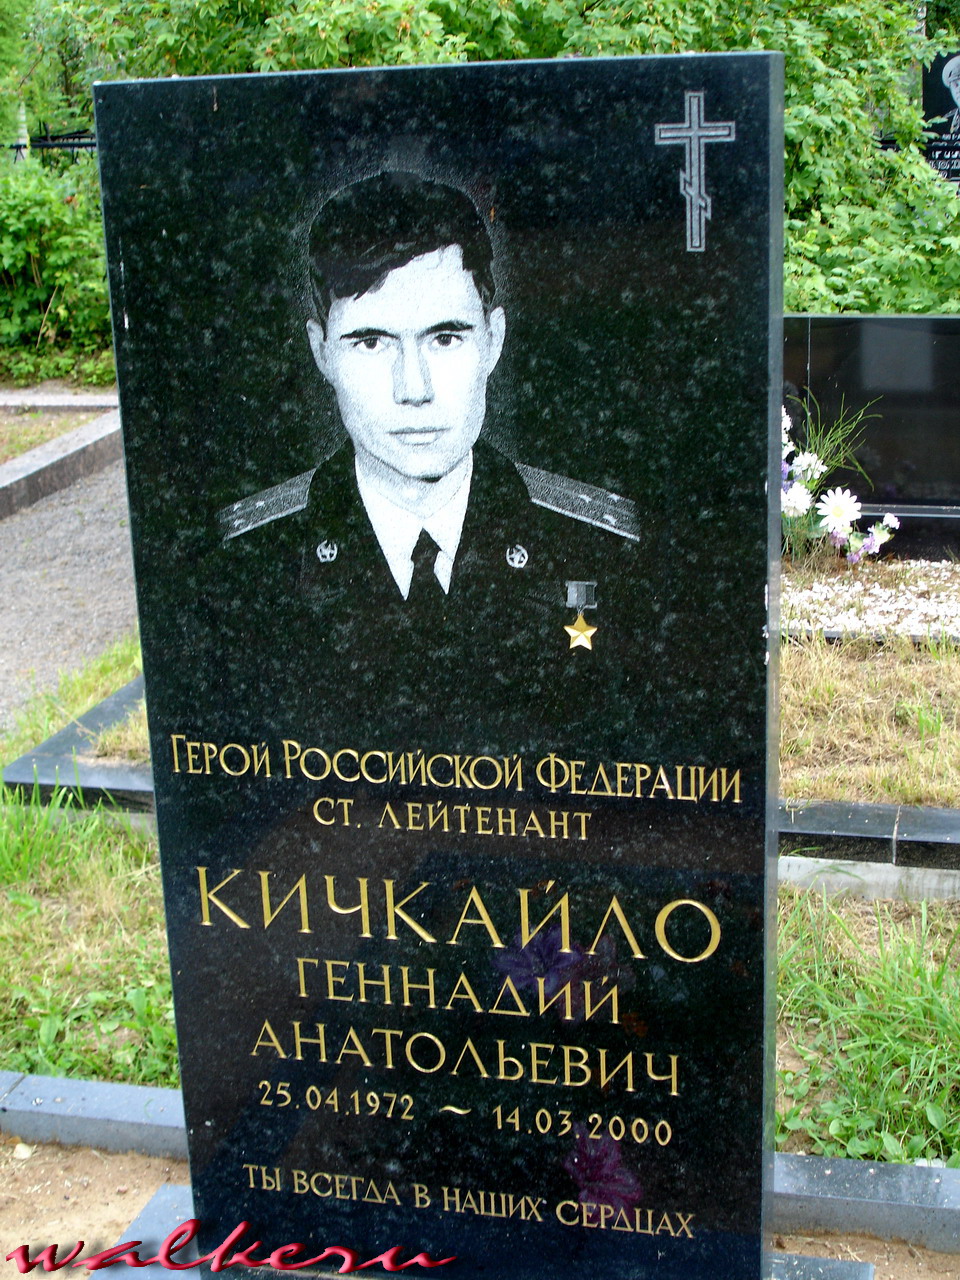 Могила Кичкайло Г.А. на Ново-Троицком кладбище